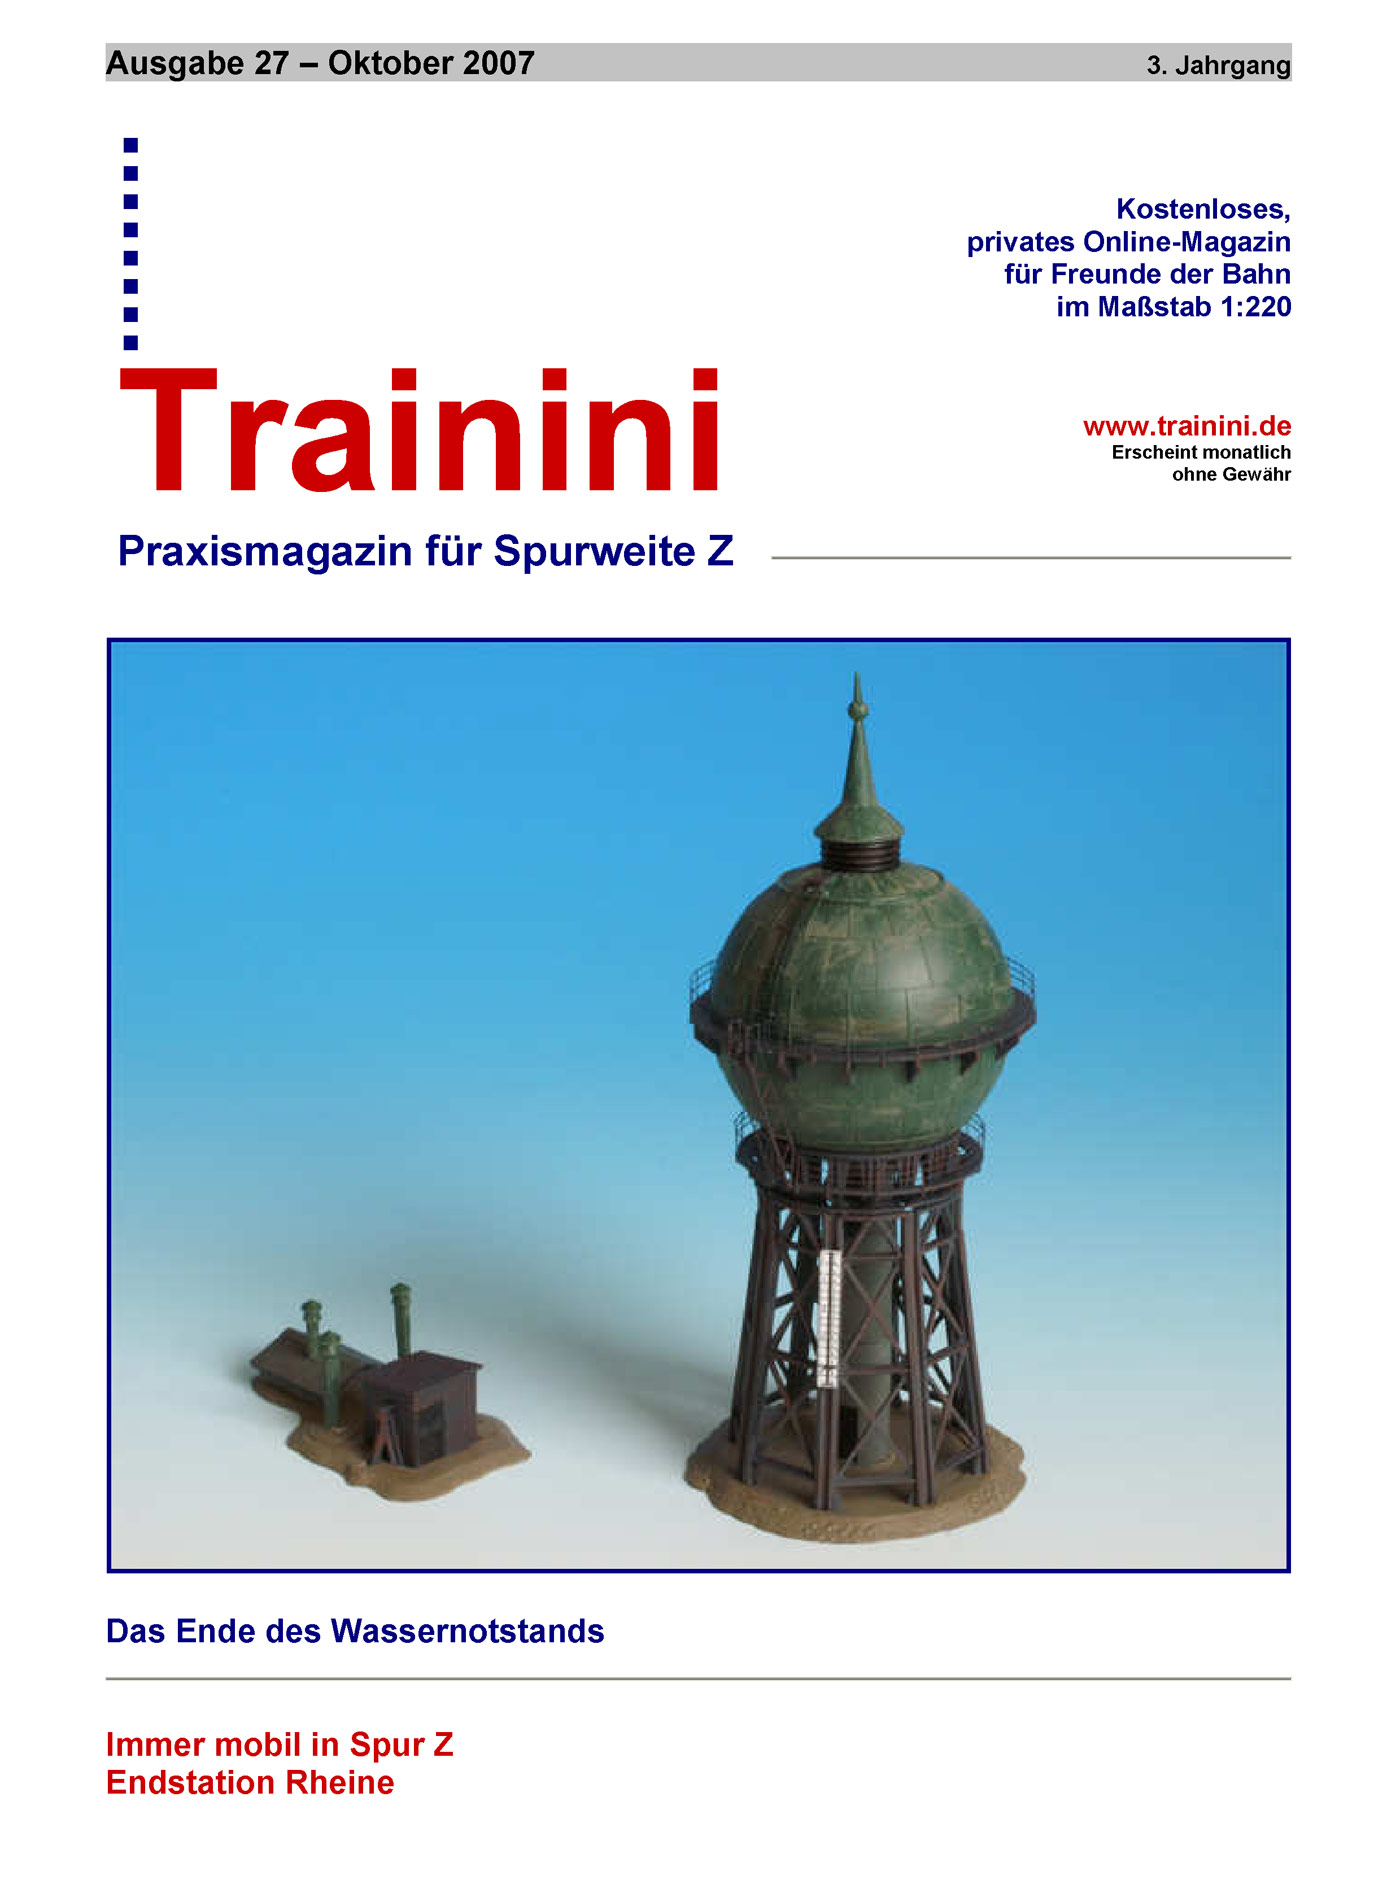 Trainini Ausgabe Oktober 2007